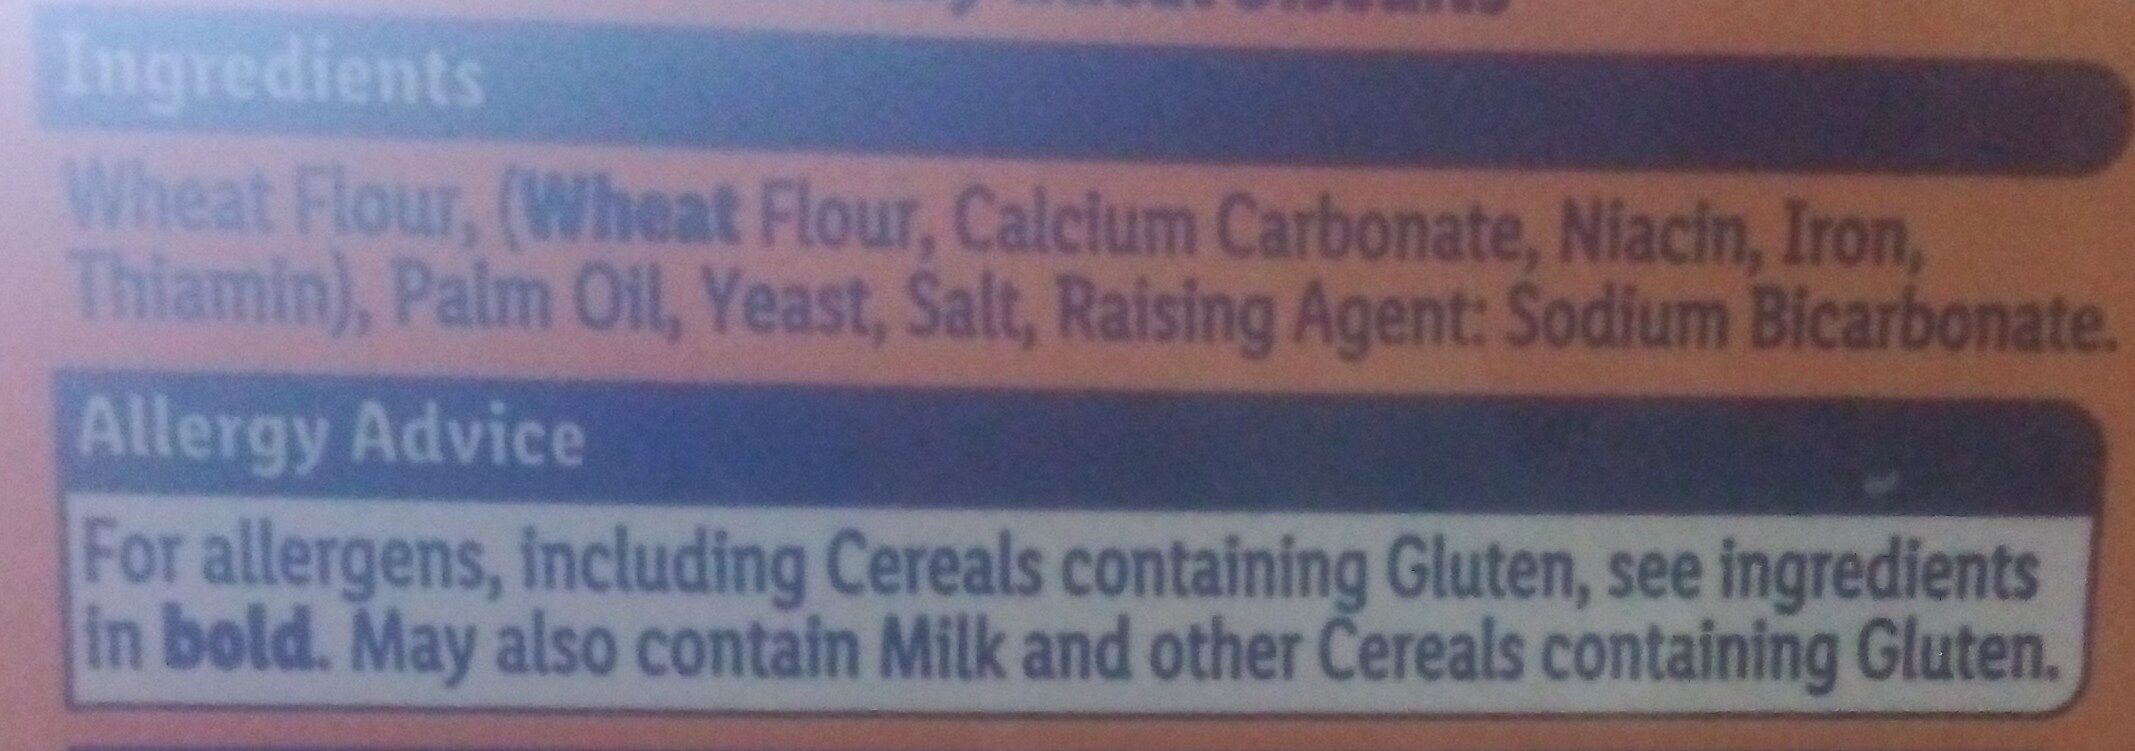 Cream crackers - Ingredients